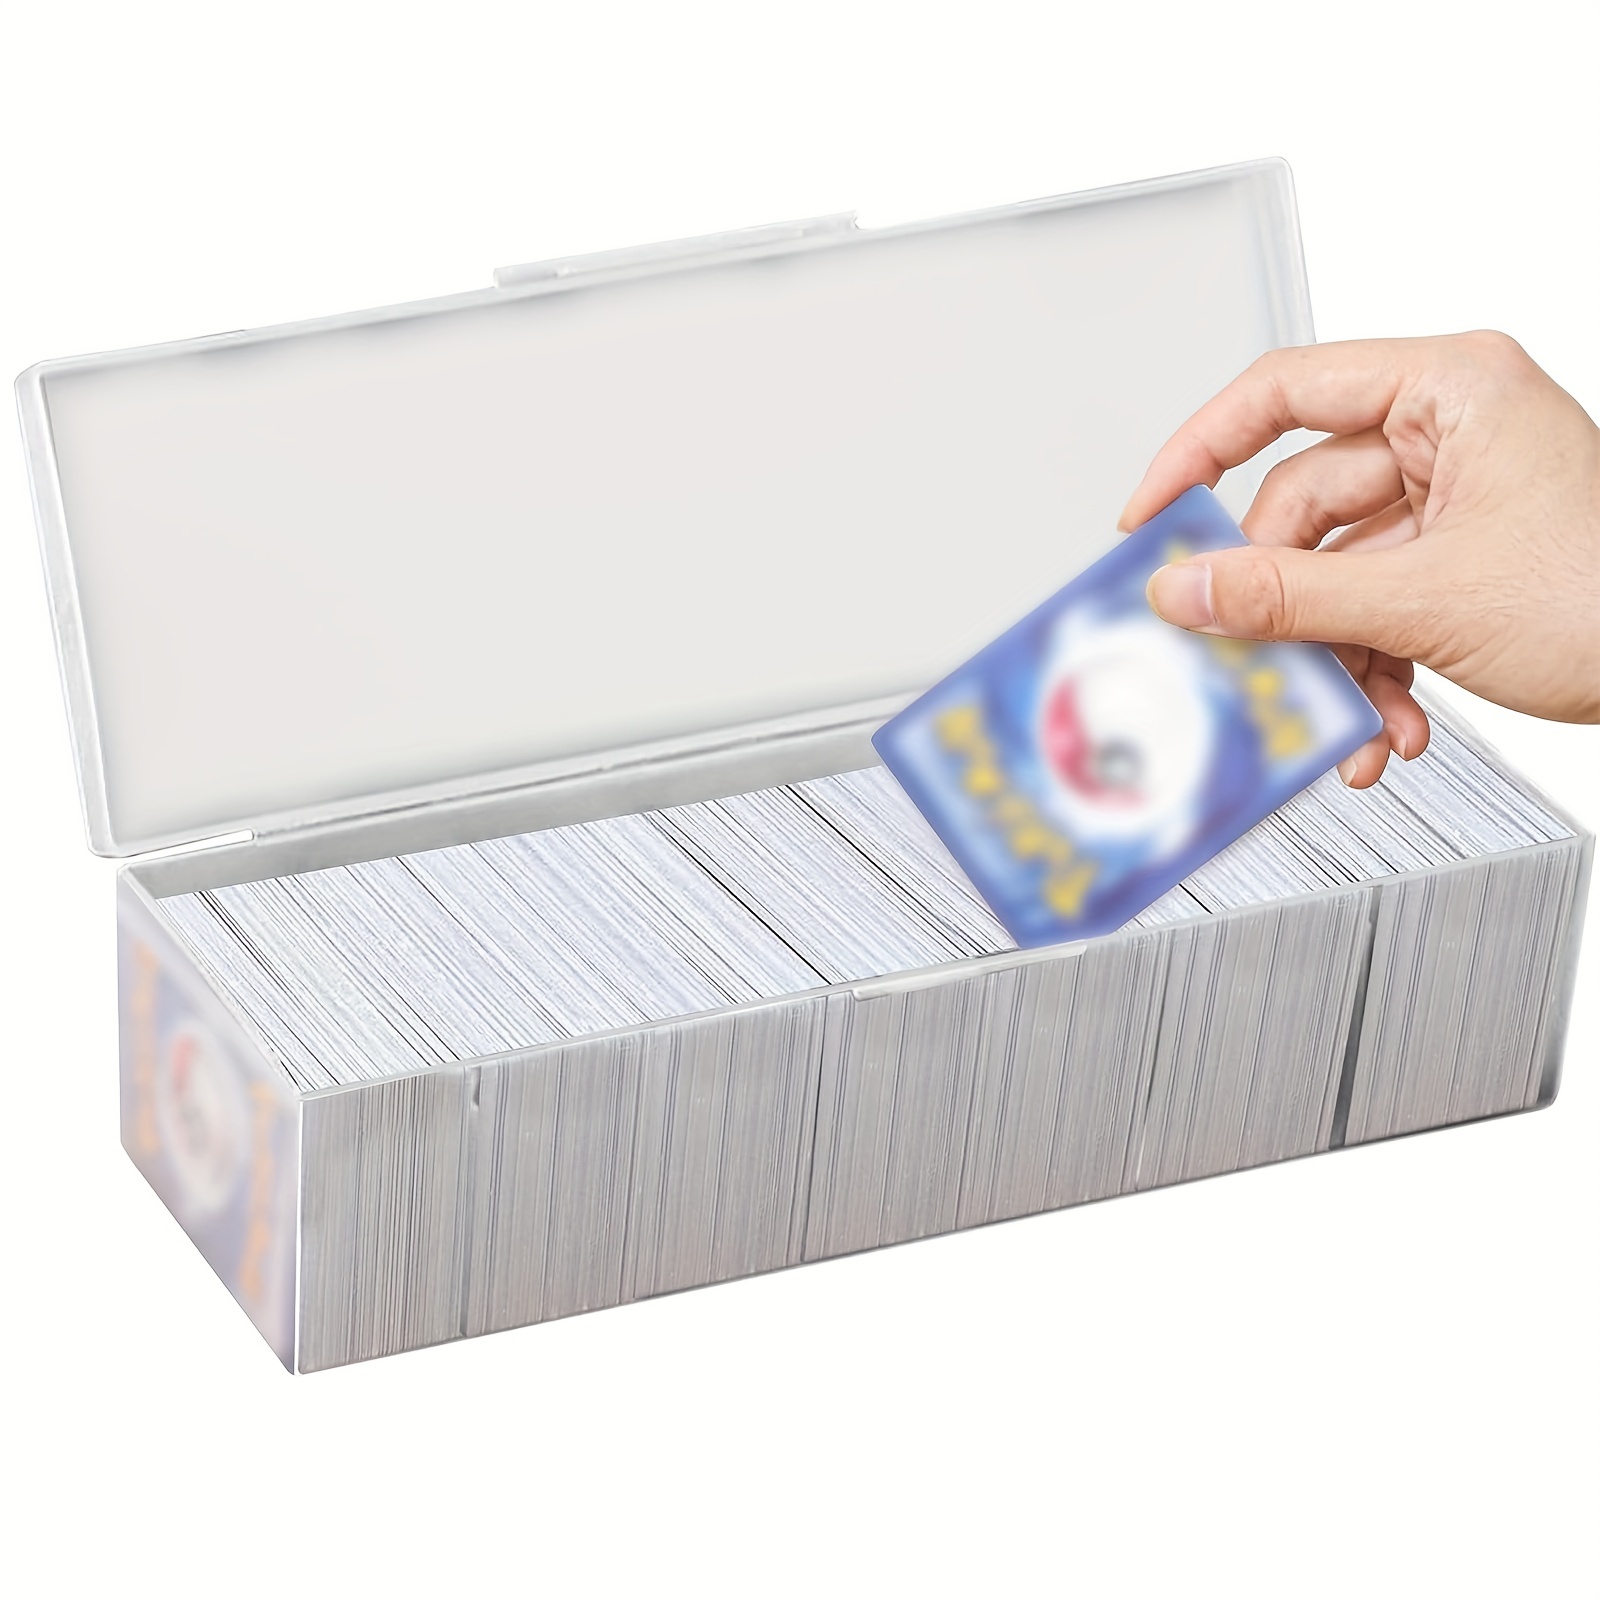 25 Big Trading Card Game Storage Box